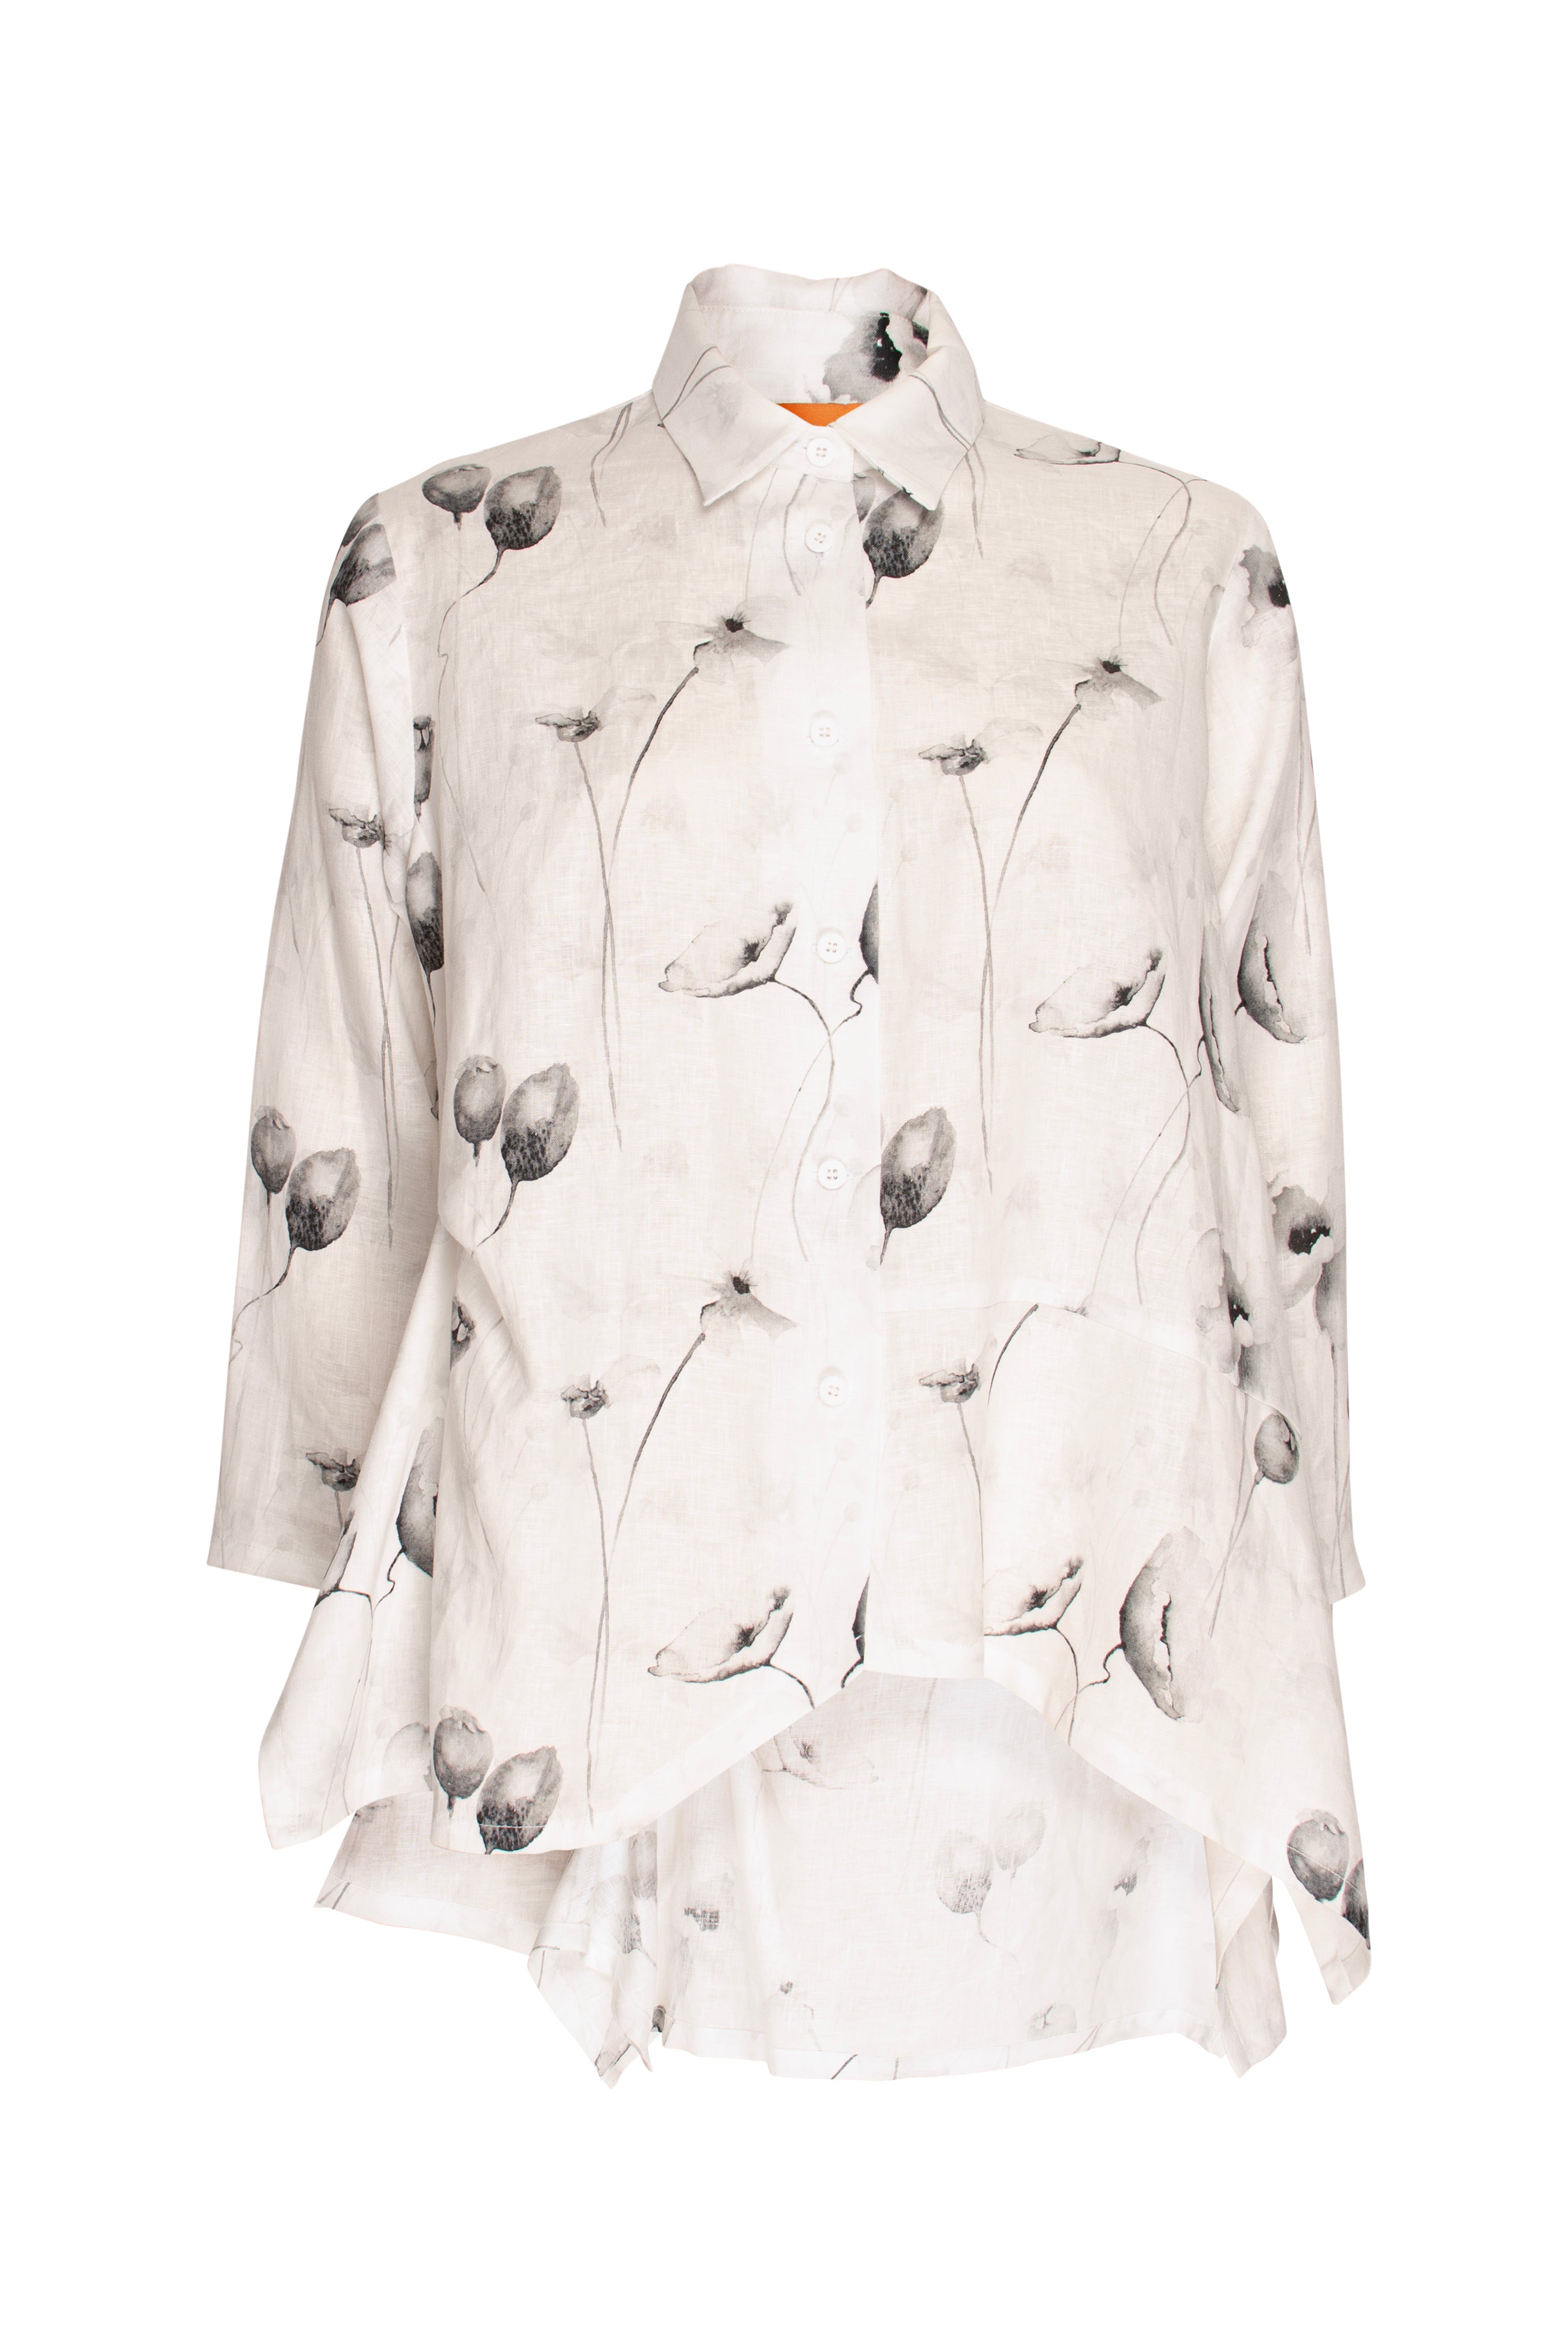 Asymmetric Angle Shirt - Silver Poppies Printed Linen 6046